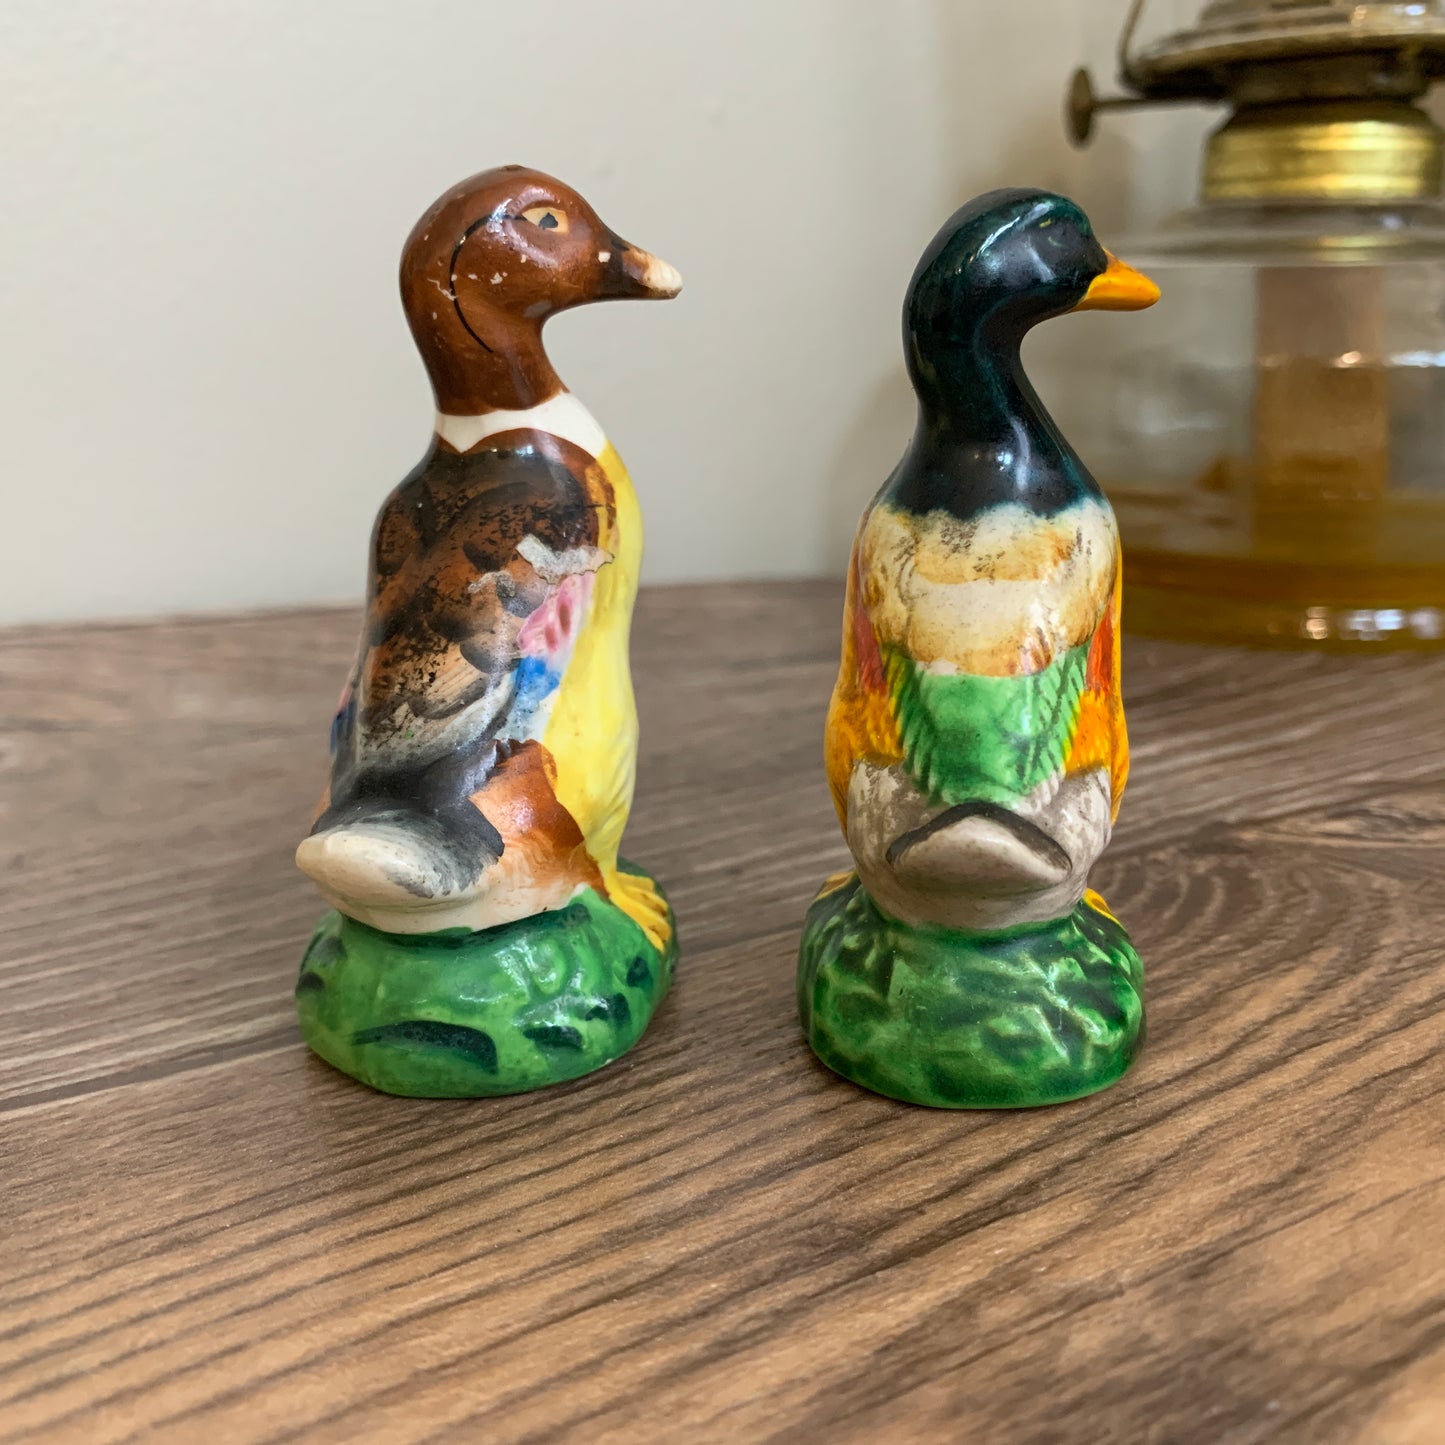 Ceramic Ducks Vintage Salt and Pepper Shakers Made in Japan Vintage Colourful Duck Salt and Pepper Shaker Set